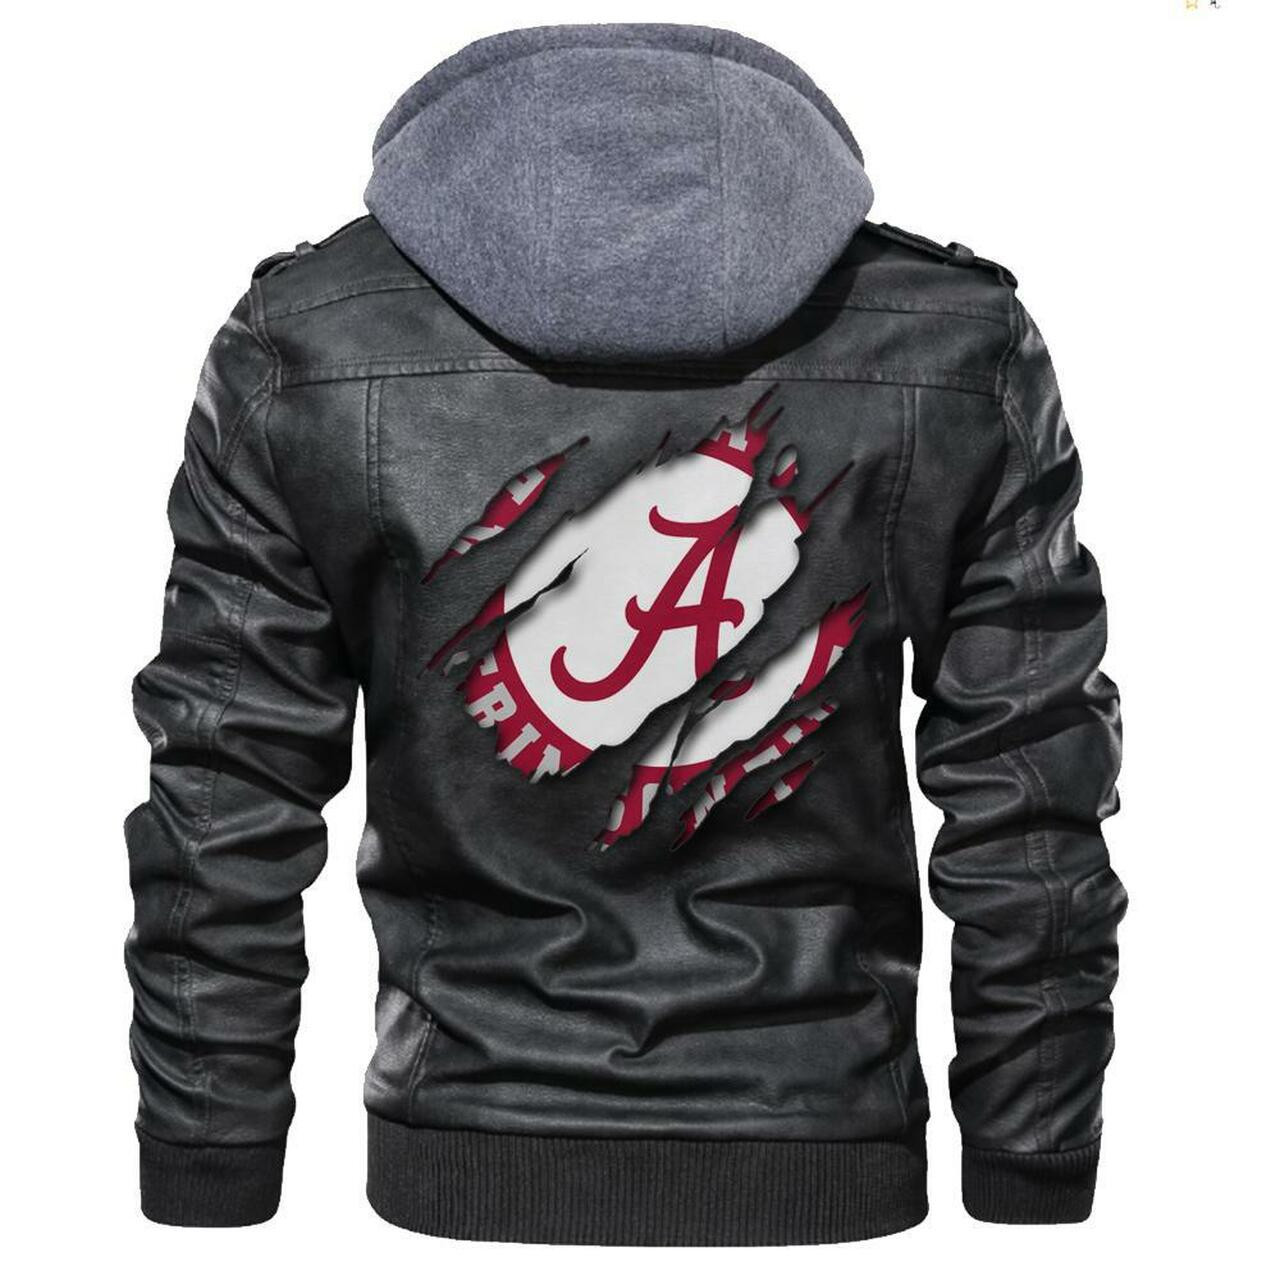 Top leather jacket Sells Best on Techcomshop 54